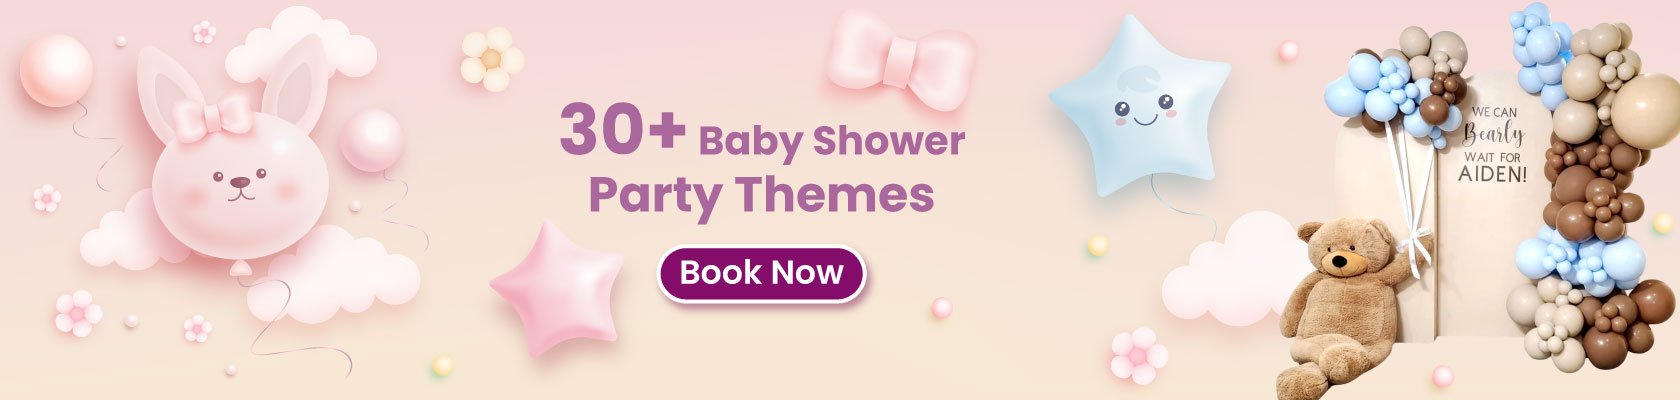 Unique baby shower decoration ideas at home